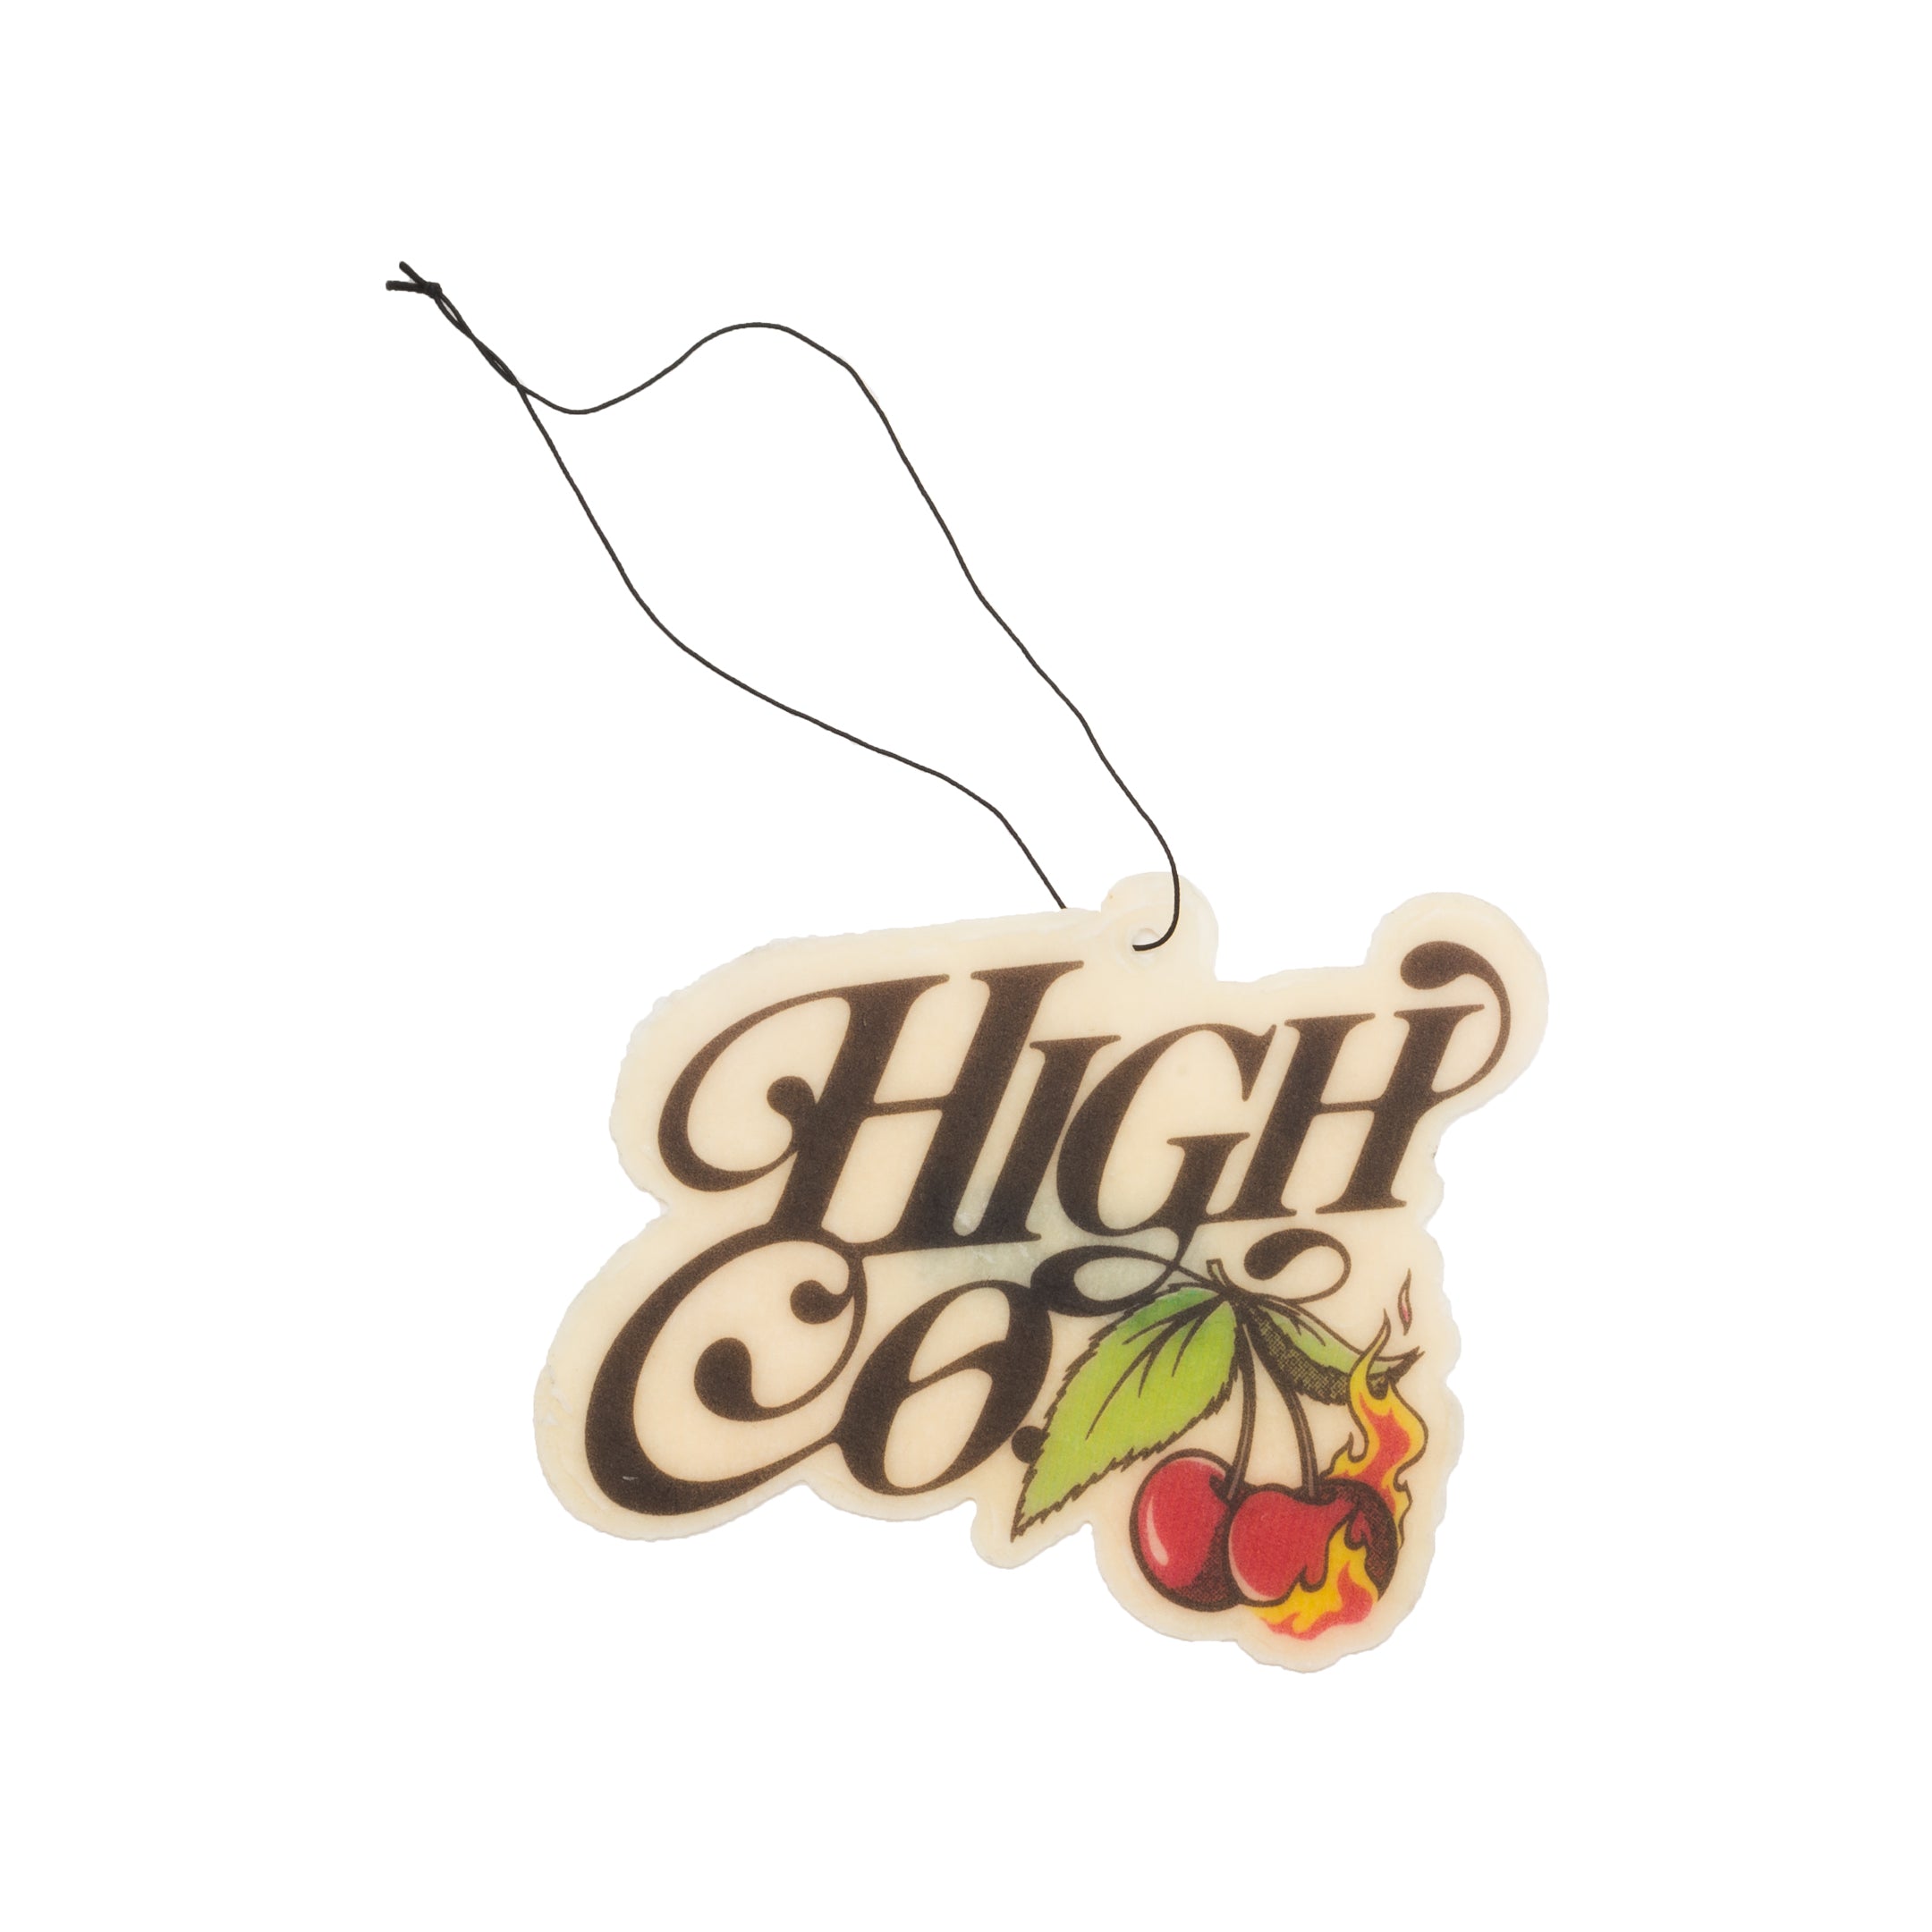 HIGH - Cherry Air Freshner